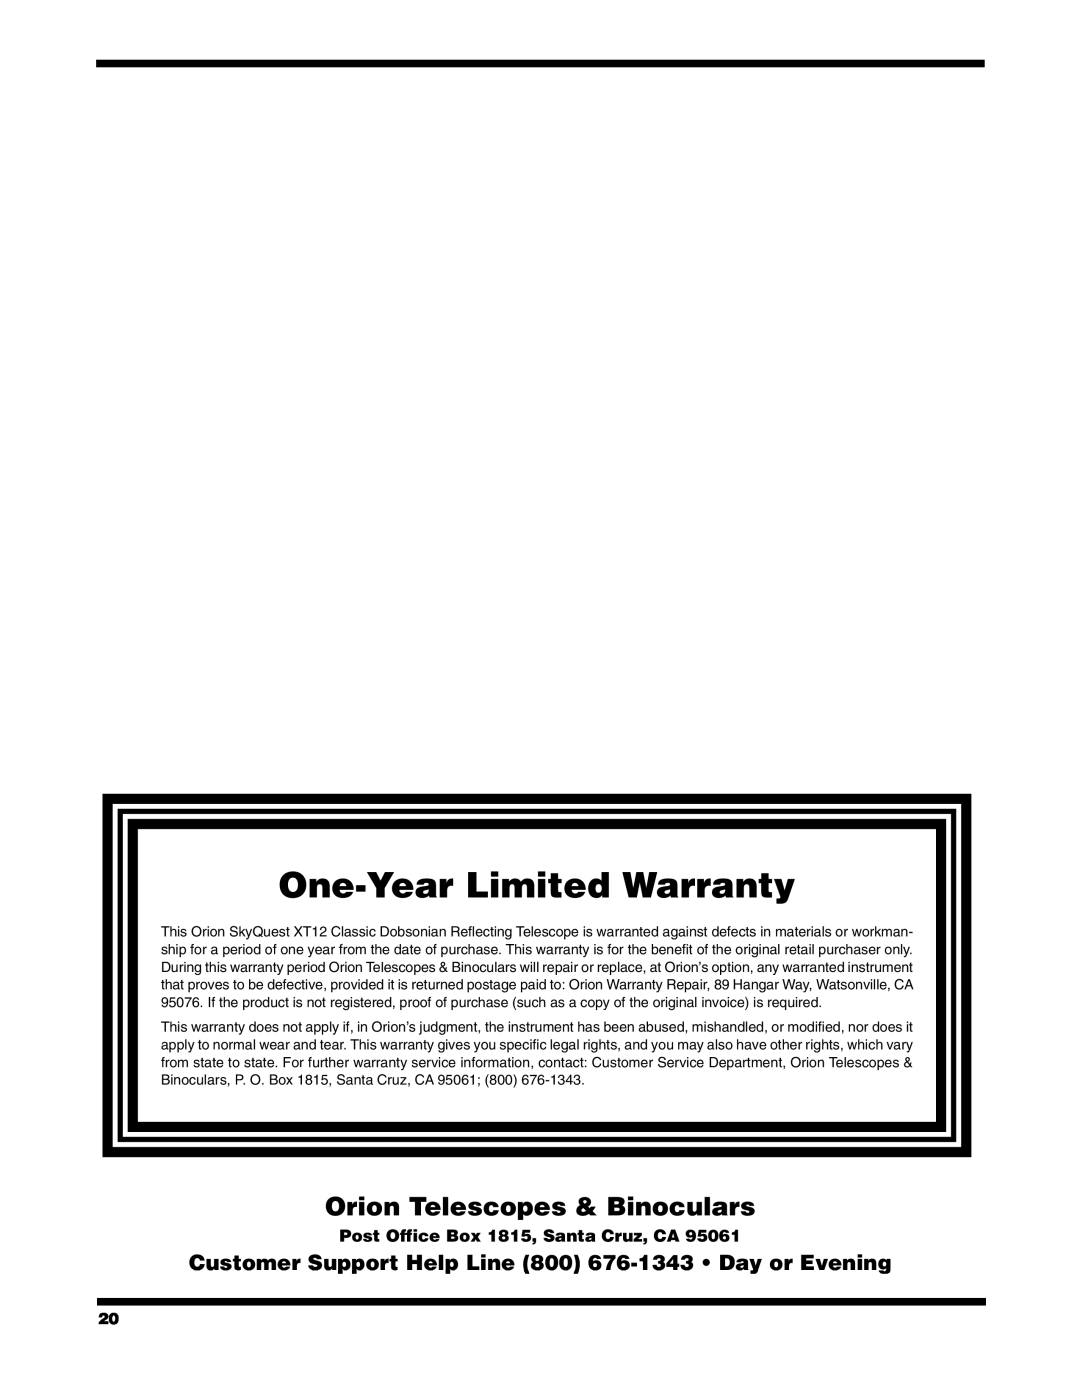 Orion 9966 One-Year Limited Warranty, Orion Telescopes & Binoculars, Post Office Box 1815, Santa Cruz, CA 